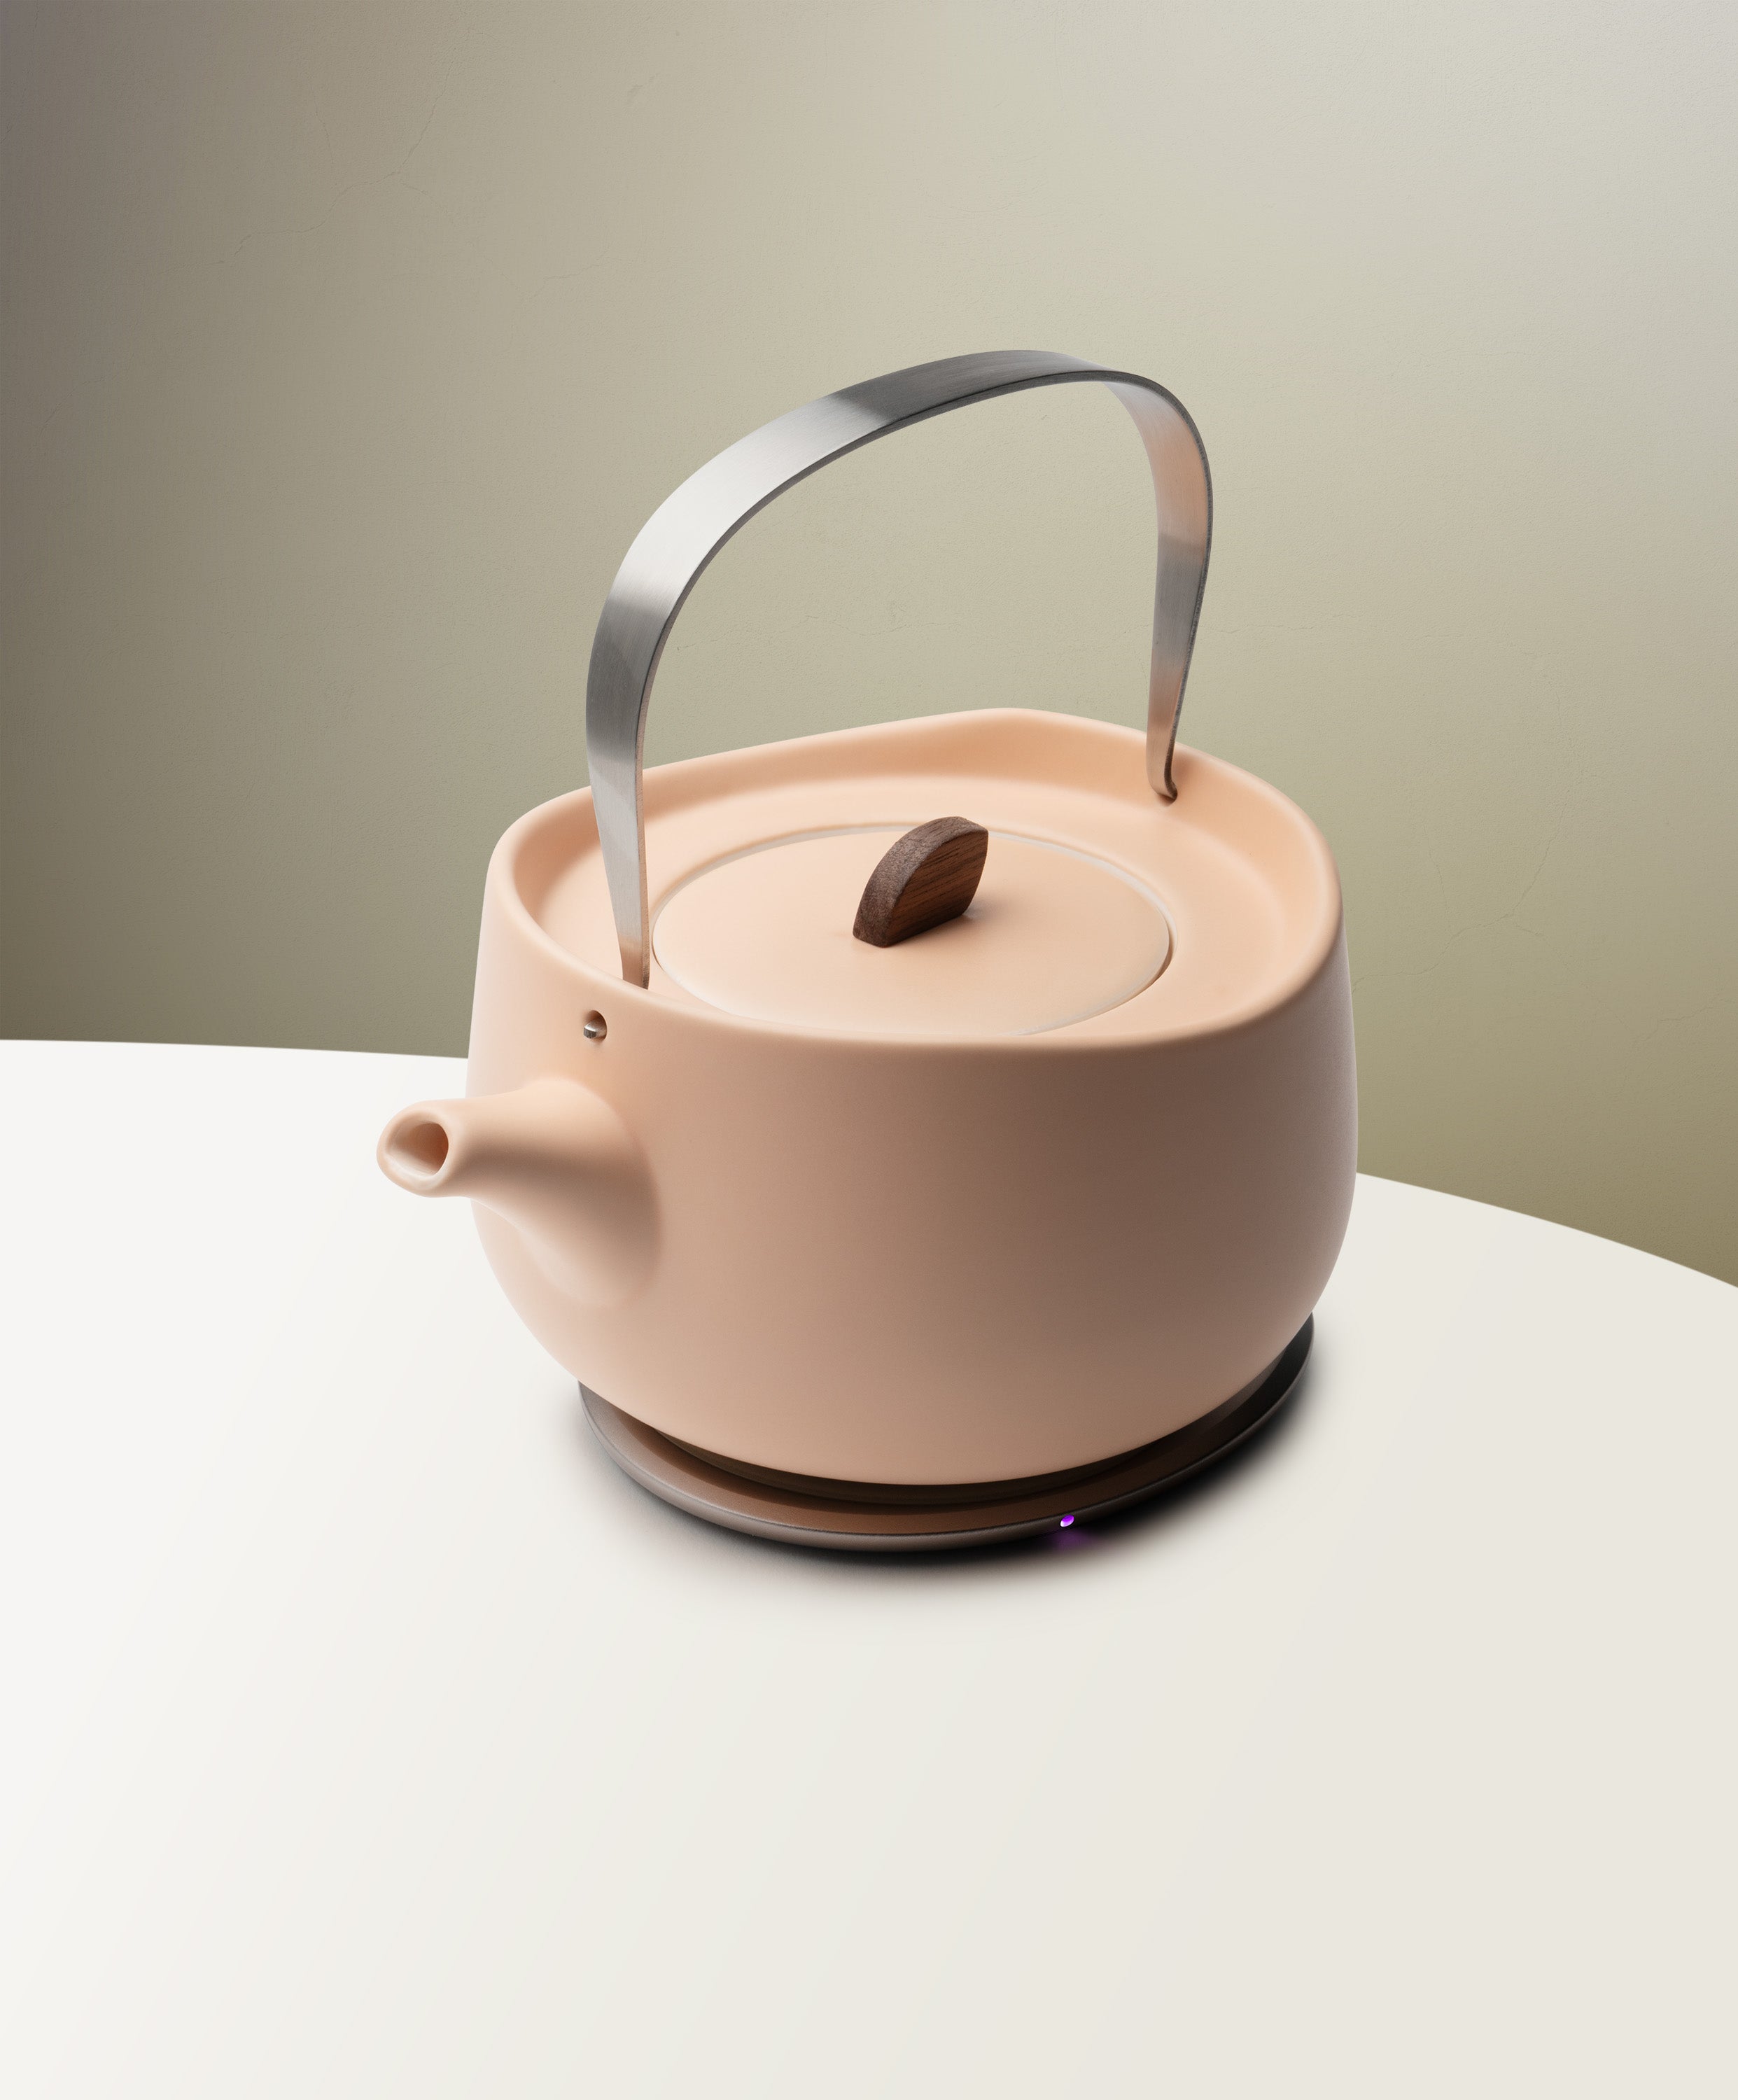 Leiph Self-heating Teapot Set - Rosy Apricot